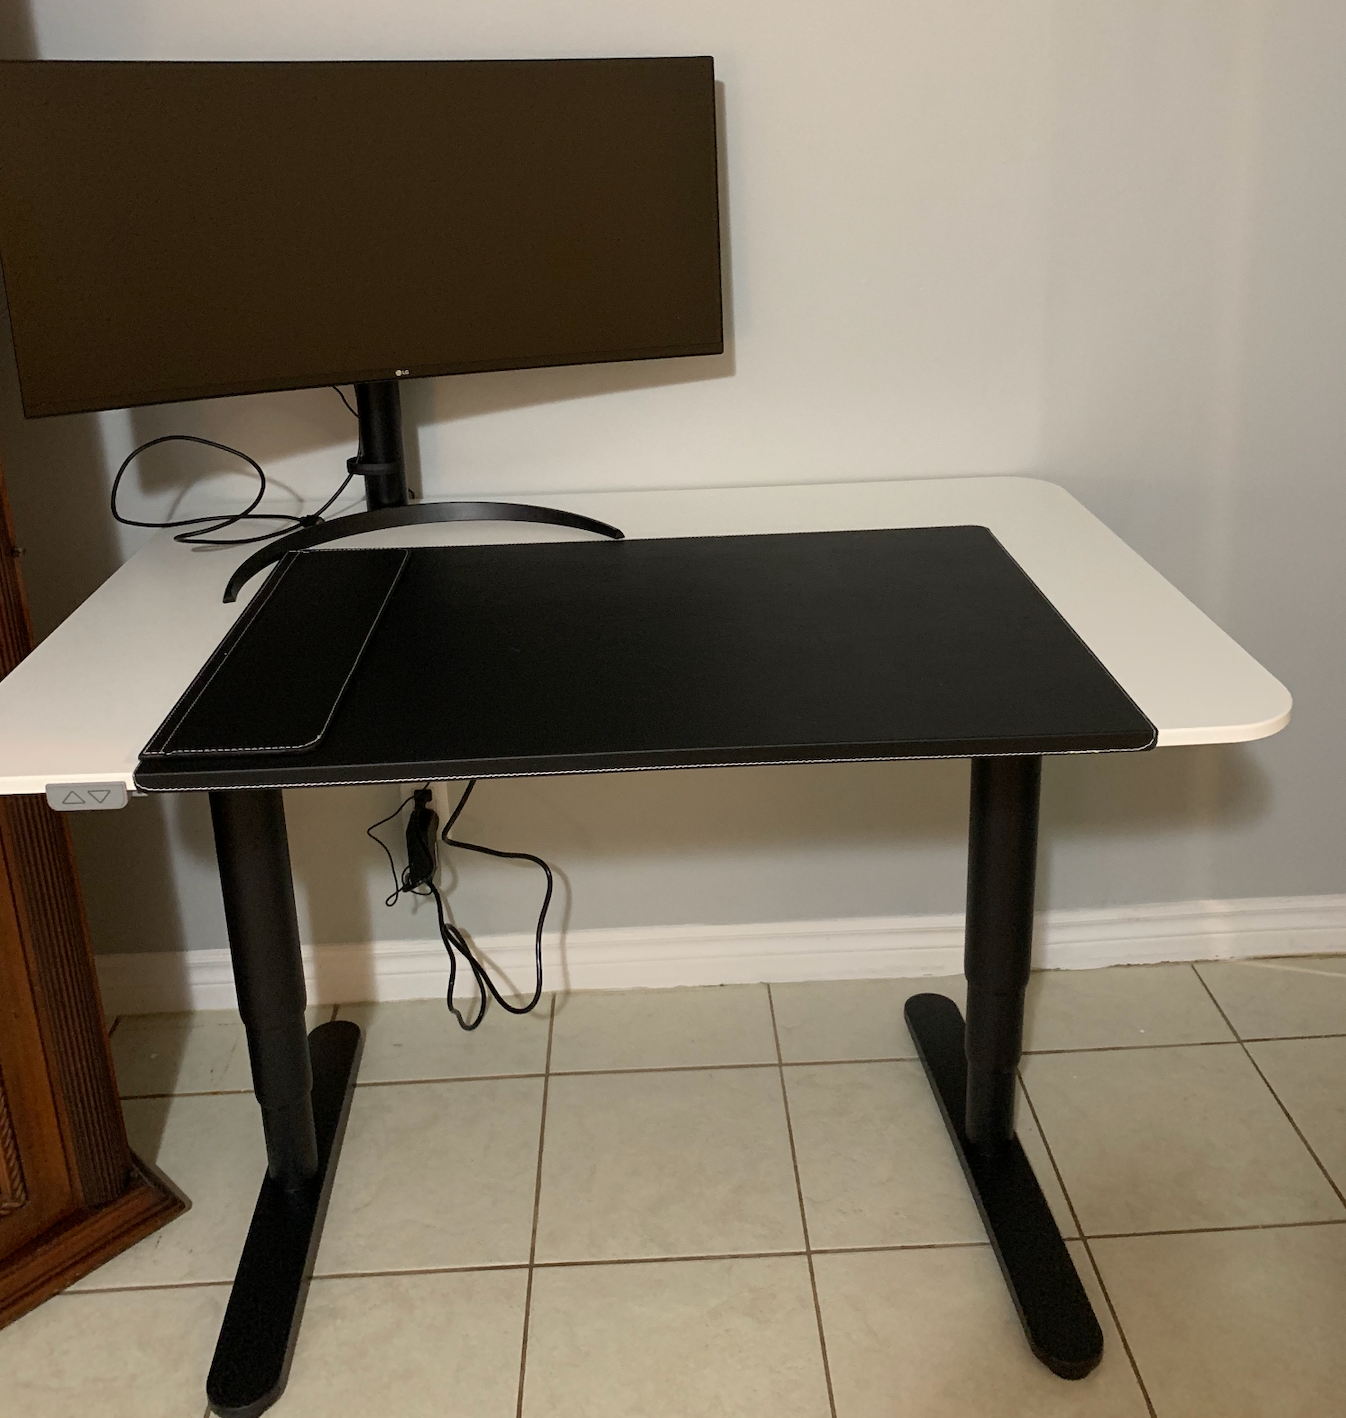 FlexiSpot E7 vs. Ikea Bekant …which is the better standing desk?